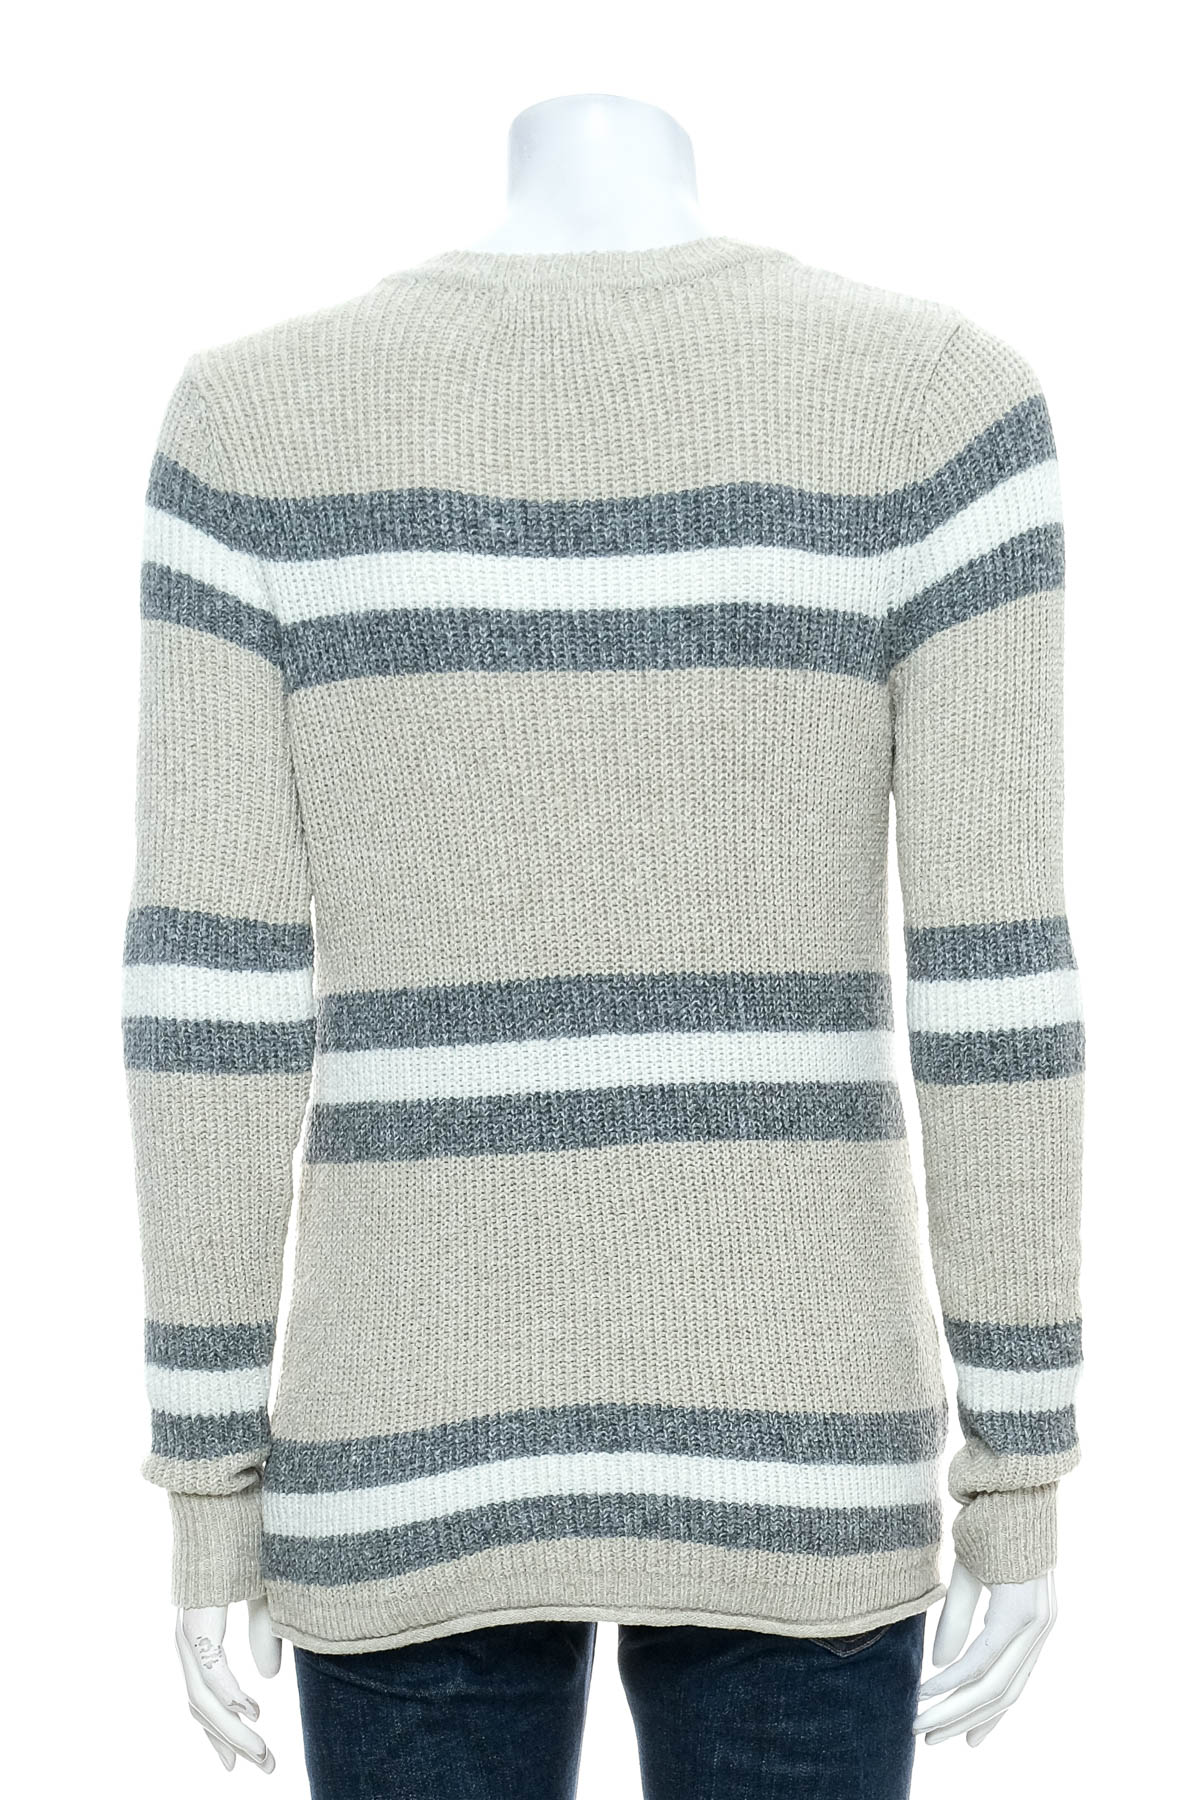 Women's sweater - PINK REPUBLIC - 1